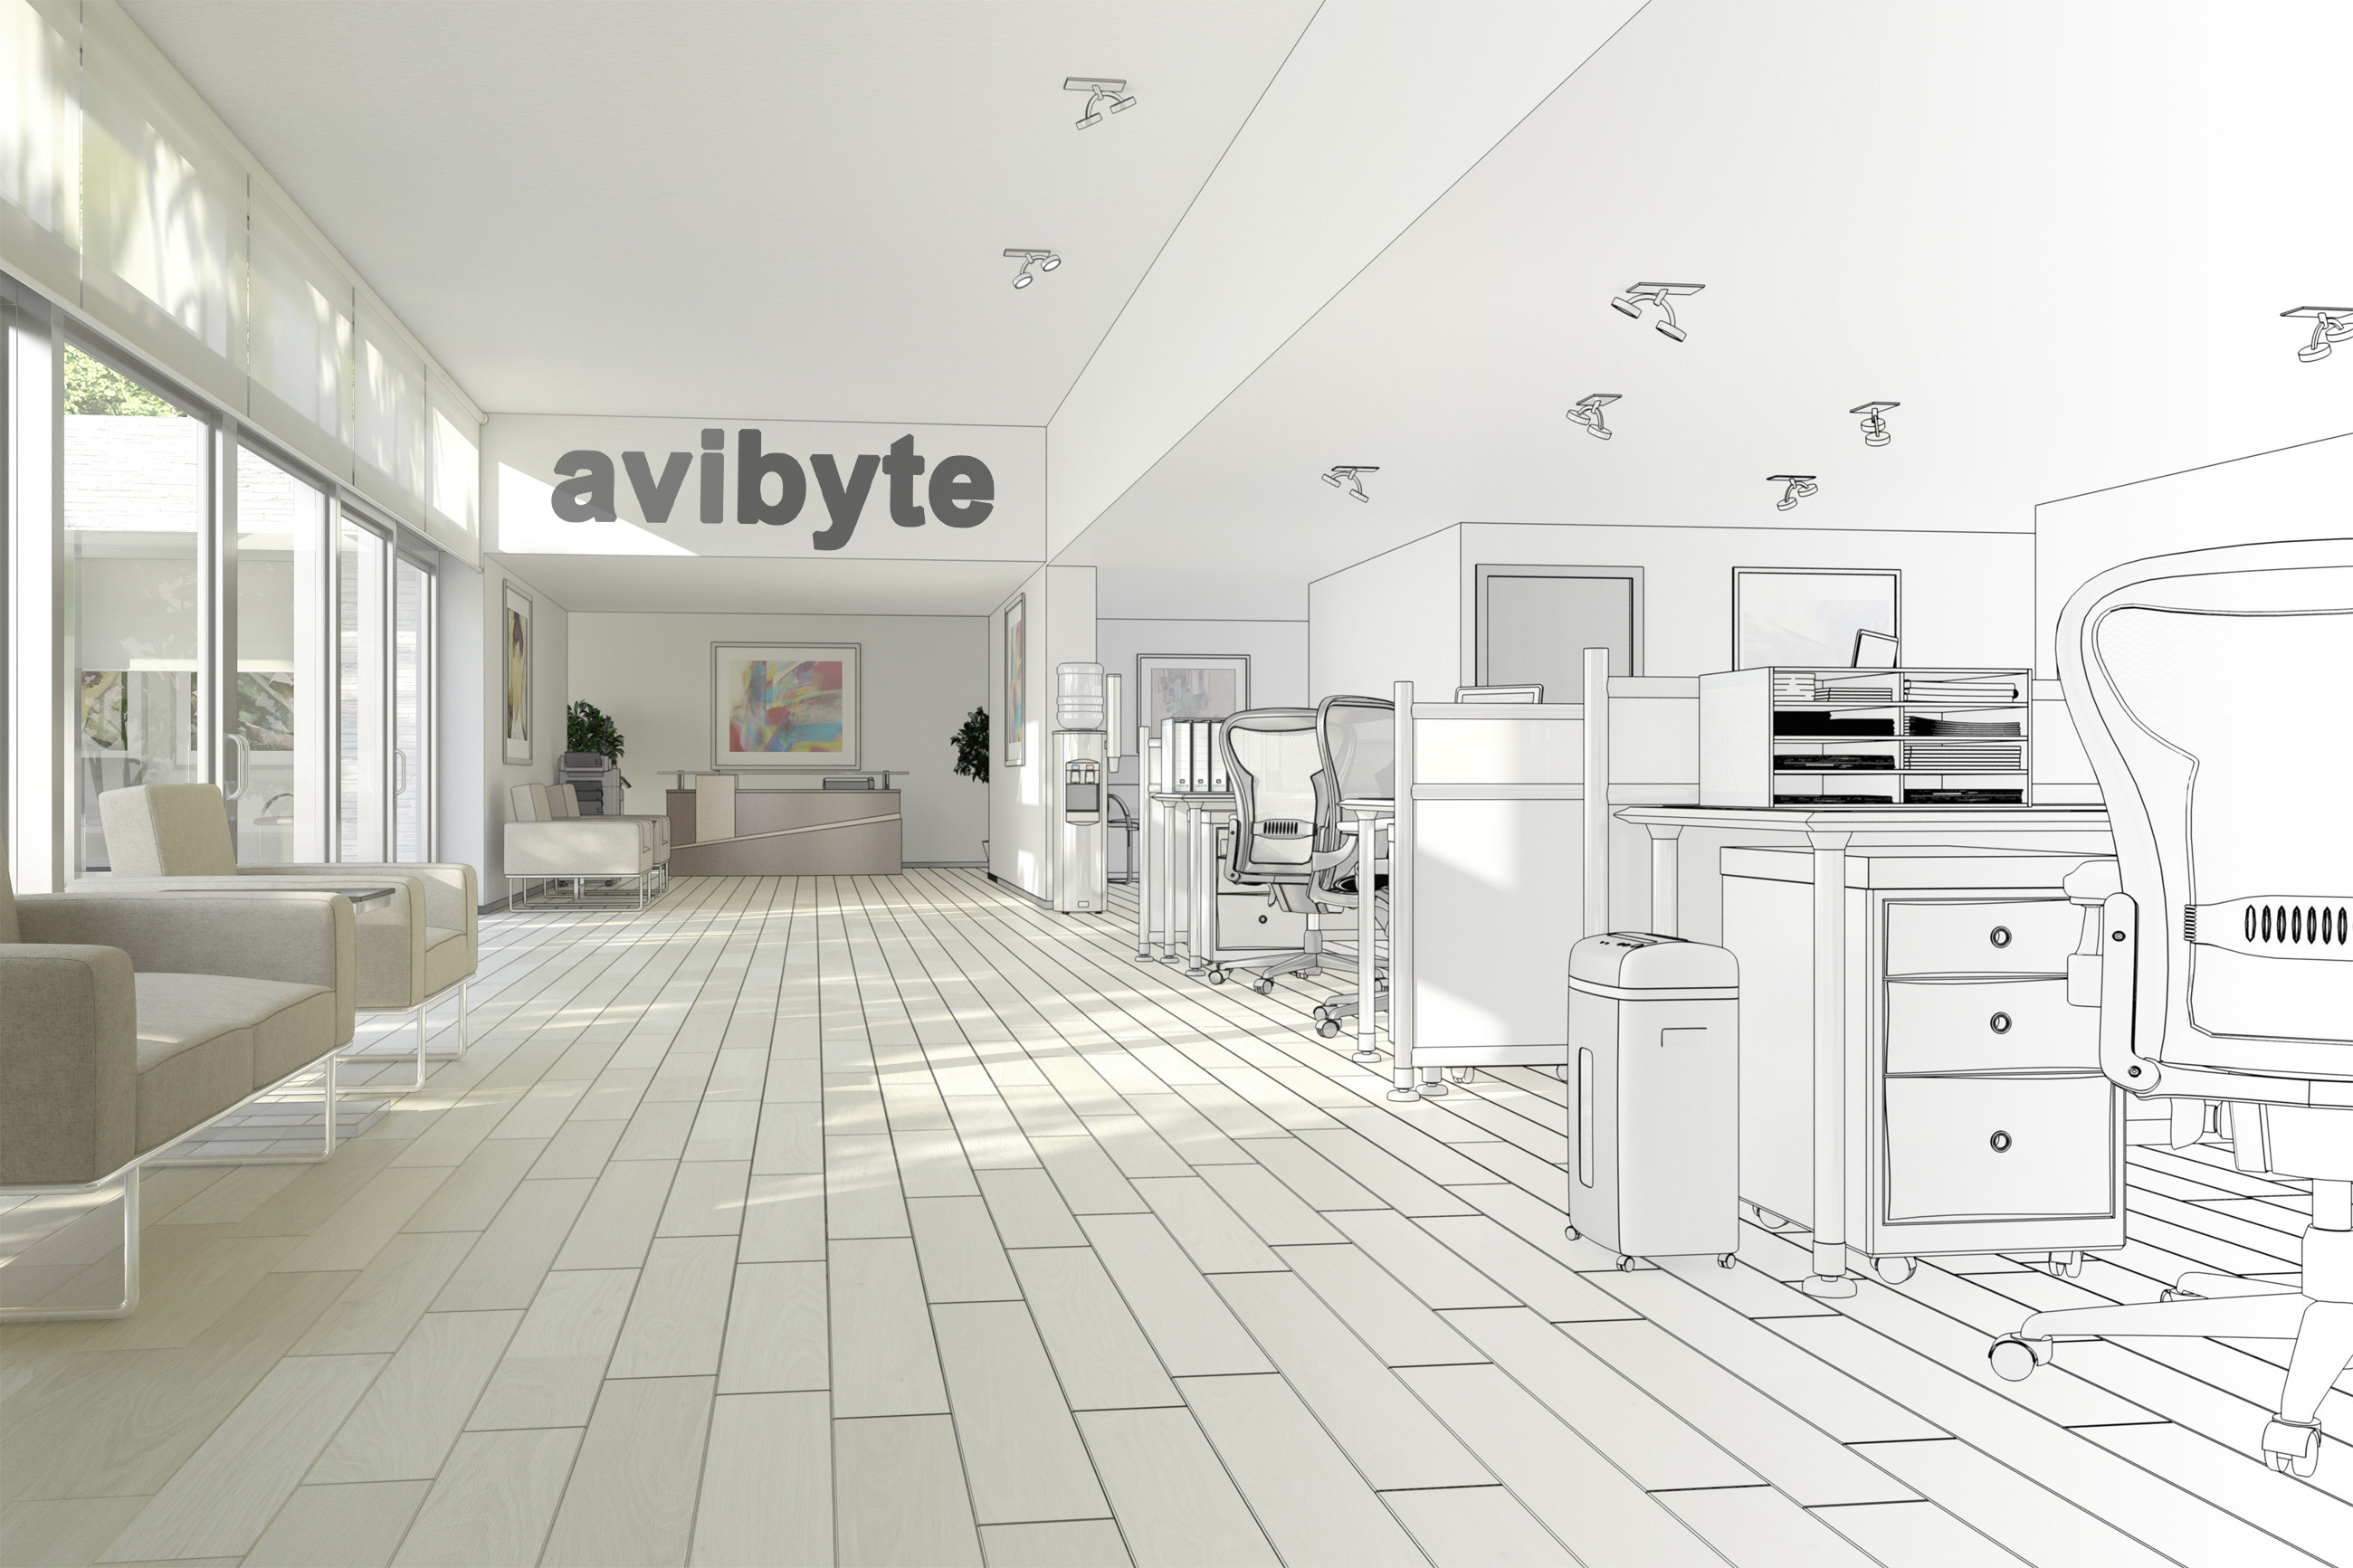 Avibyte GmbH